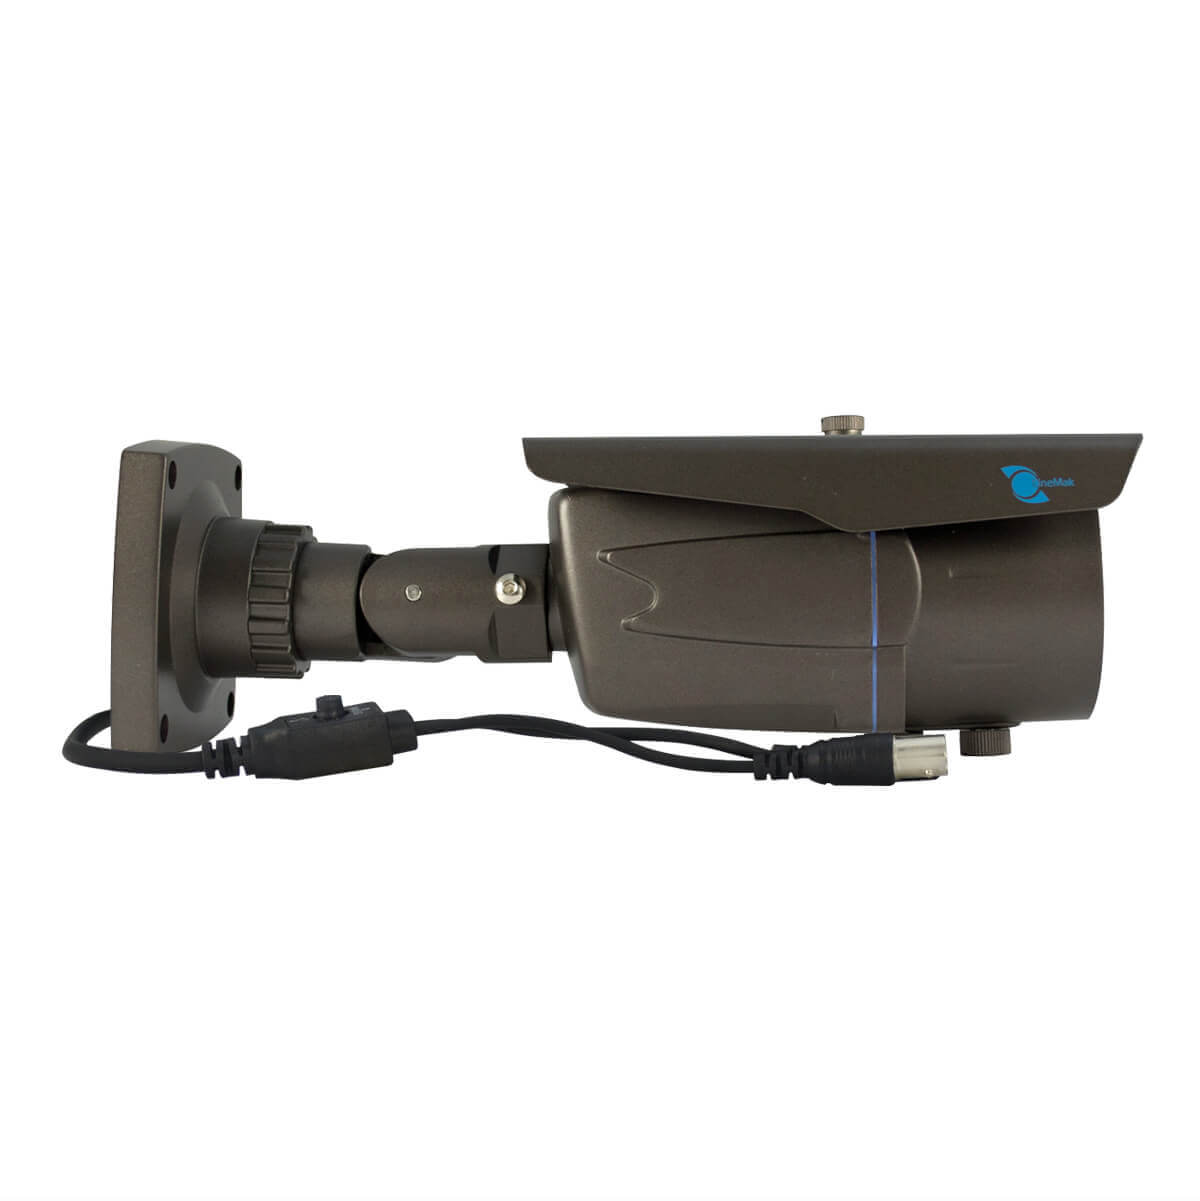 Camara tipo bazuca, Sensor CCD Panasonic 1/3, 800TVL, 42 LED, 40m IR